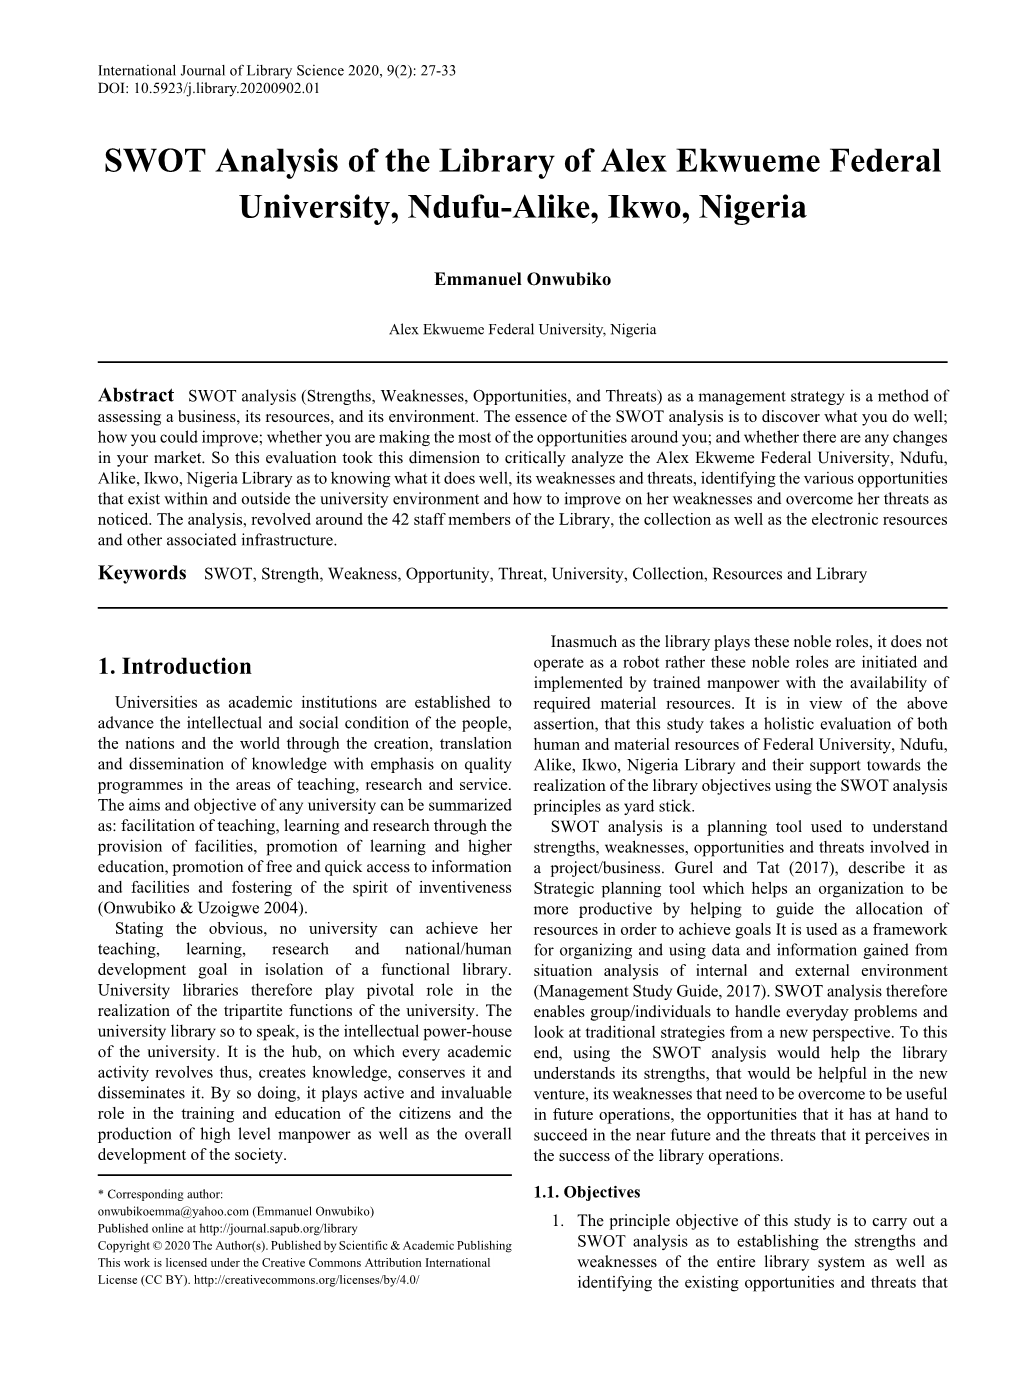 SWOT Analysis of the Library of Alex Ekwueme Federal University, Ndufu-Alike, Ikwo, Nigeria